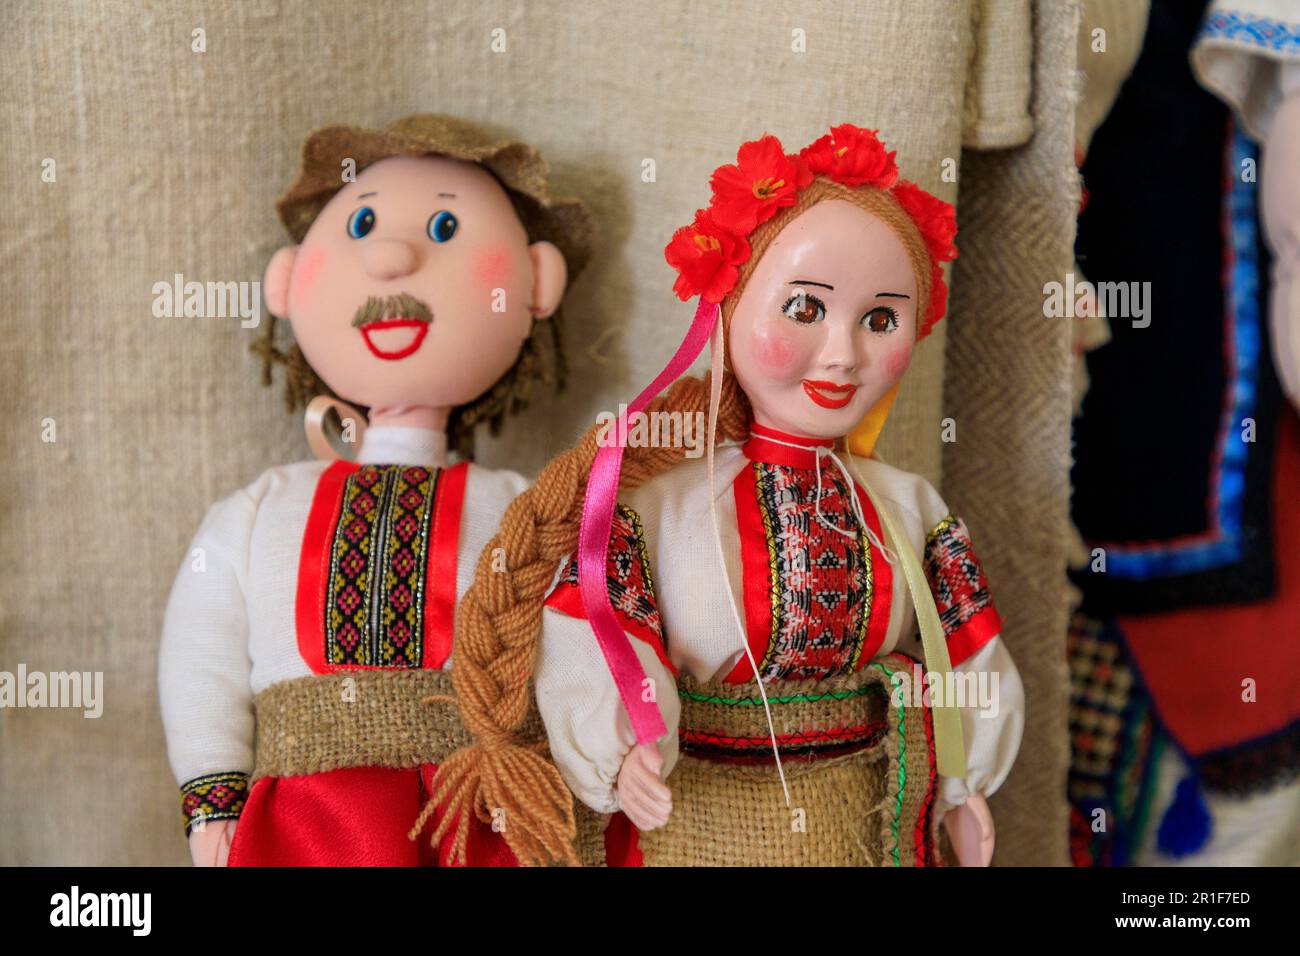 Eastern Europe,Ukraine, Kiev, Kyiv. Dolls dressed in traditional costumes of the region. Village of Olkhovchyk outside the city. Stock Photo